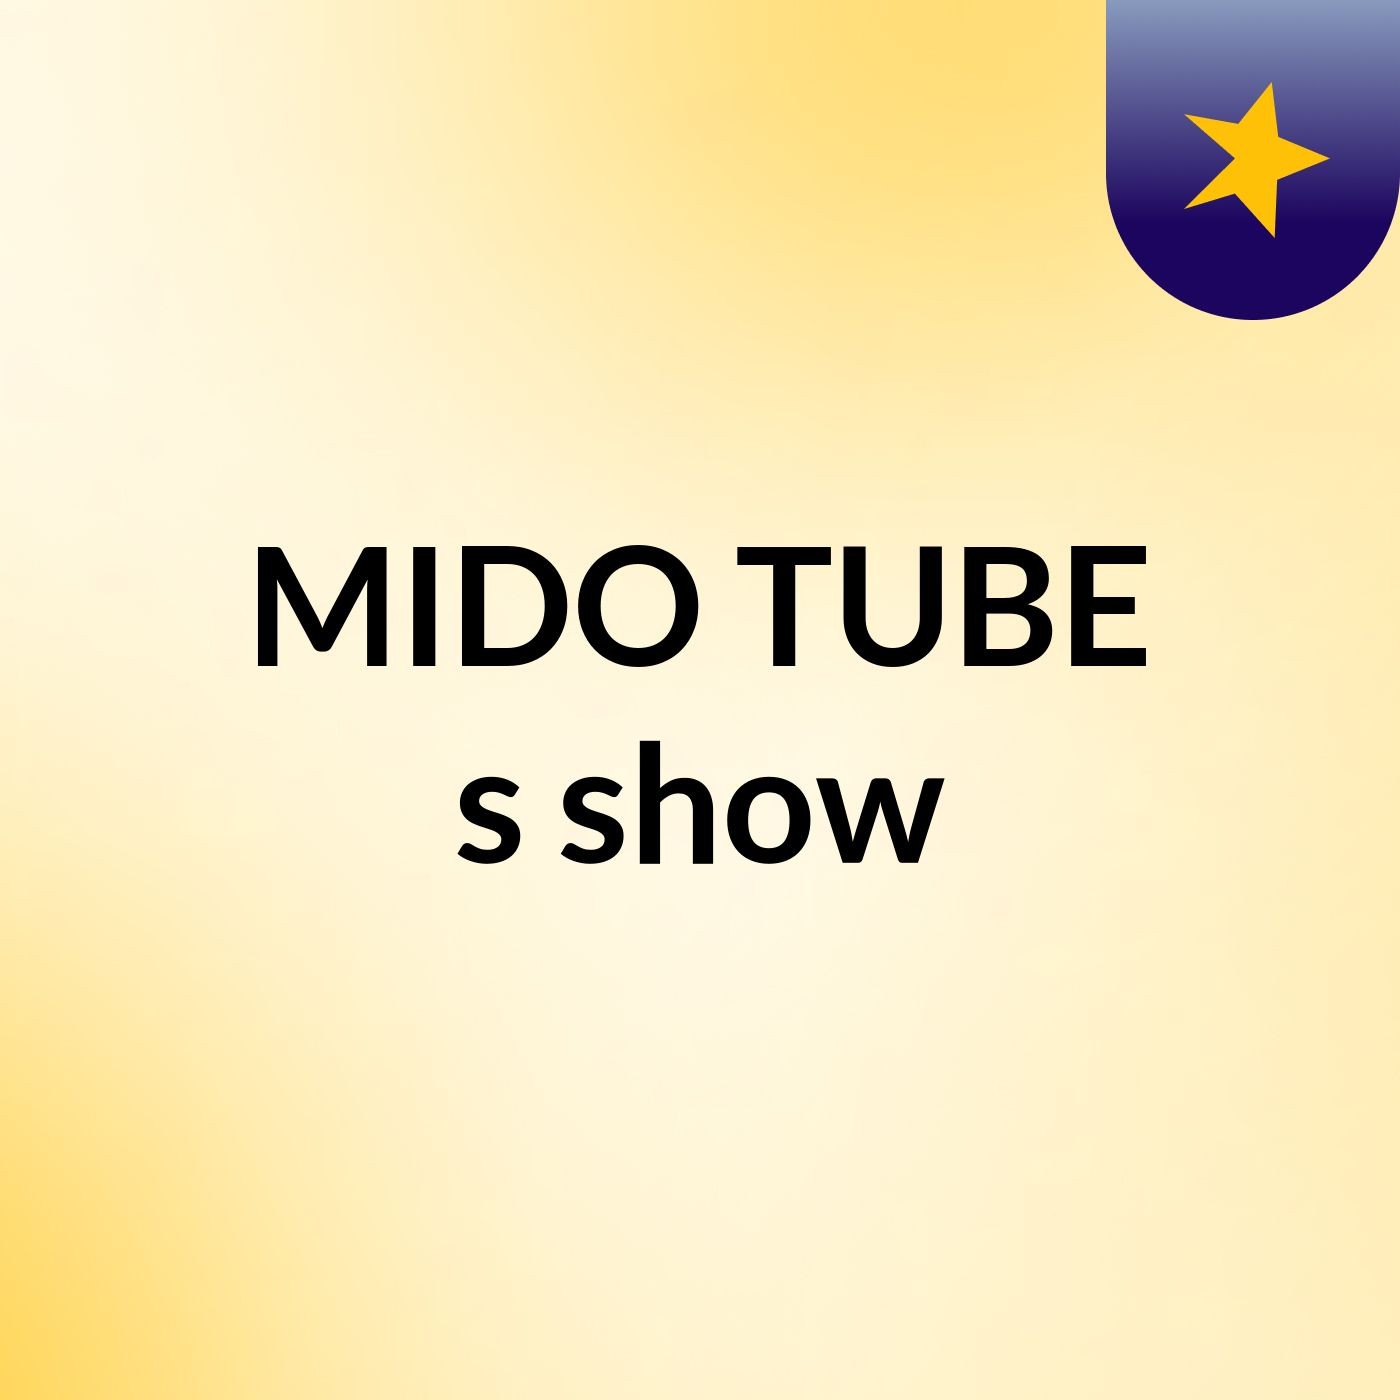 MIDO TUBE's show